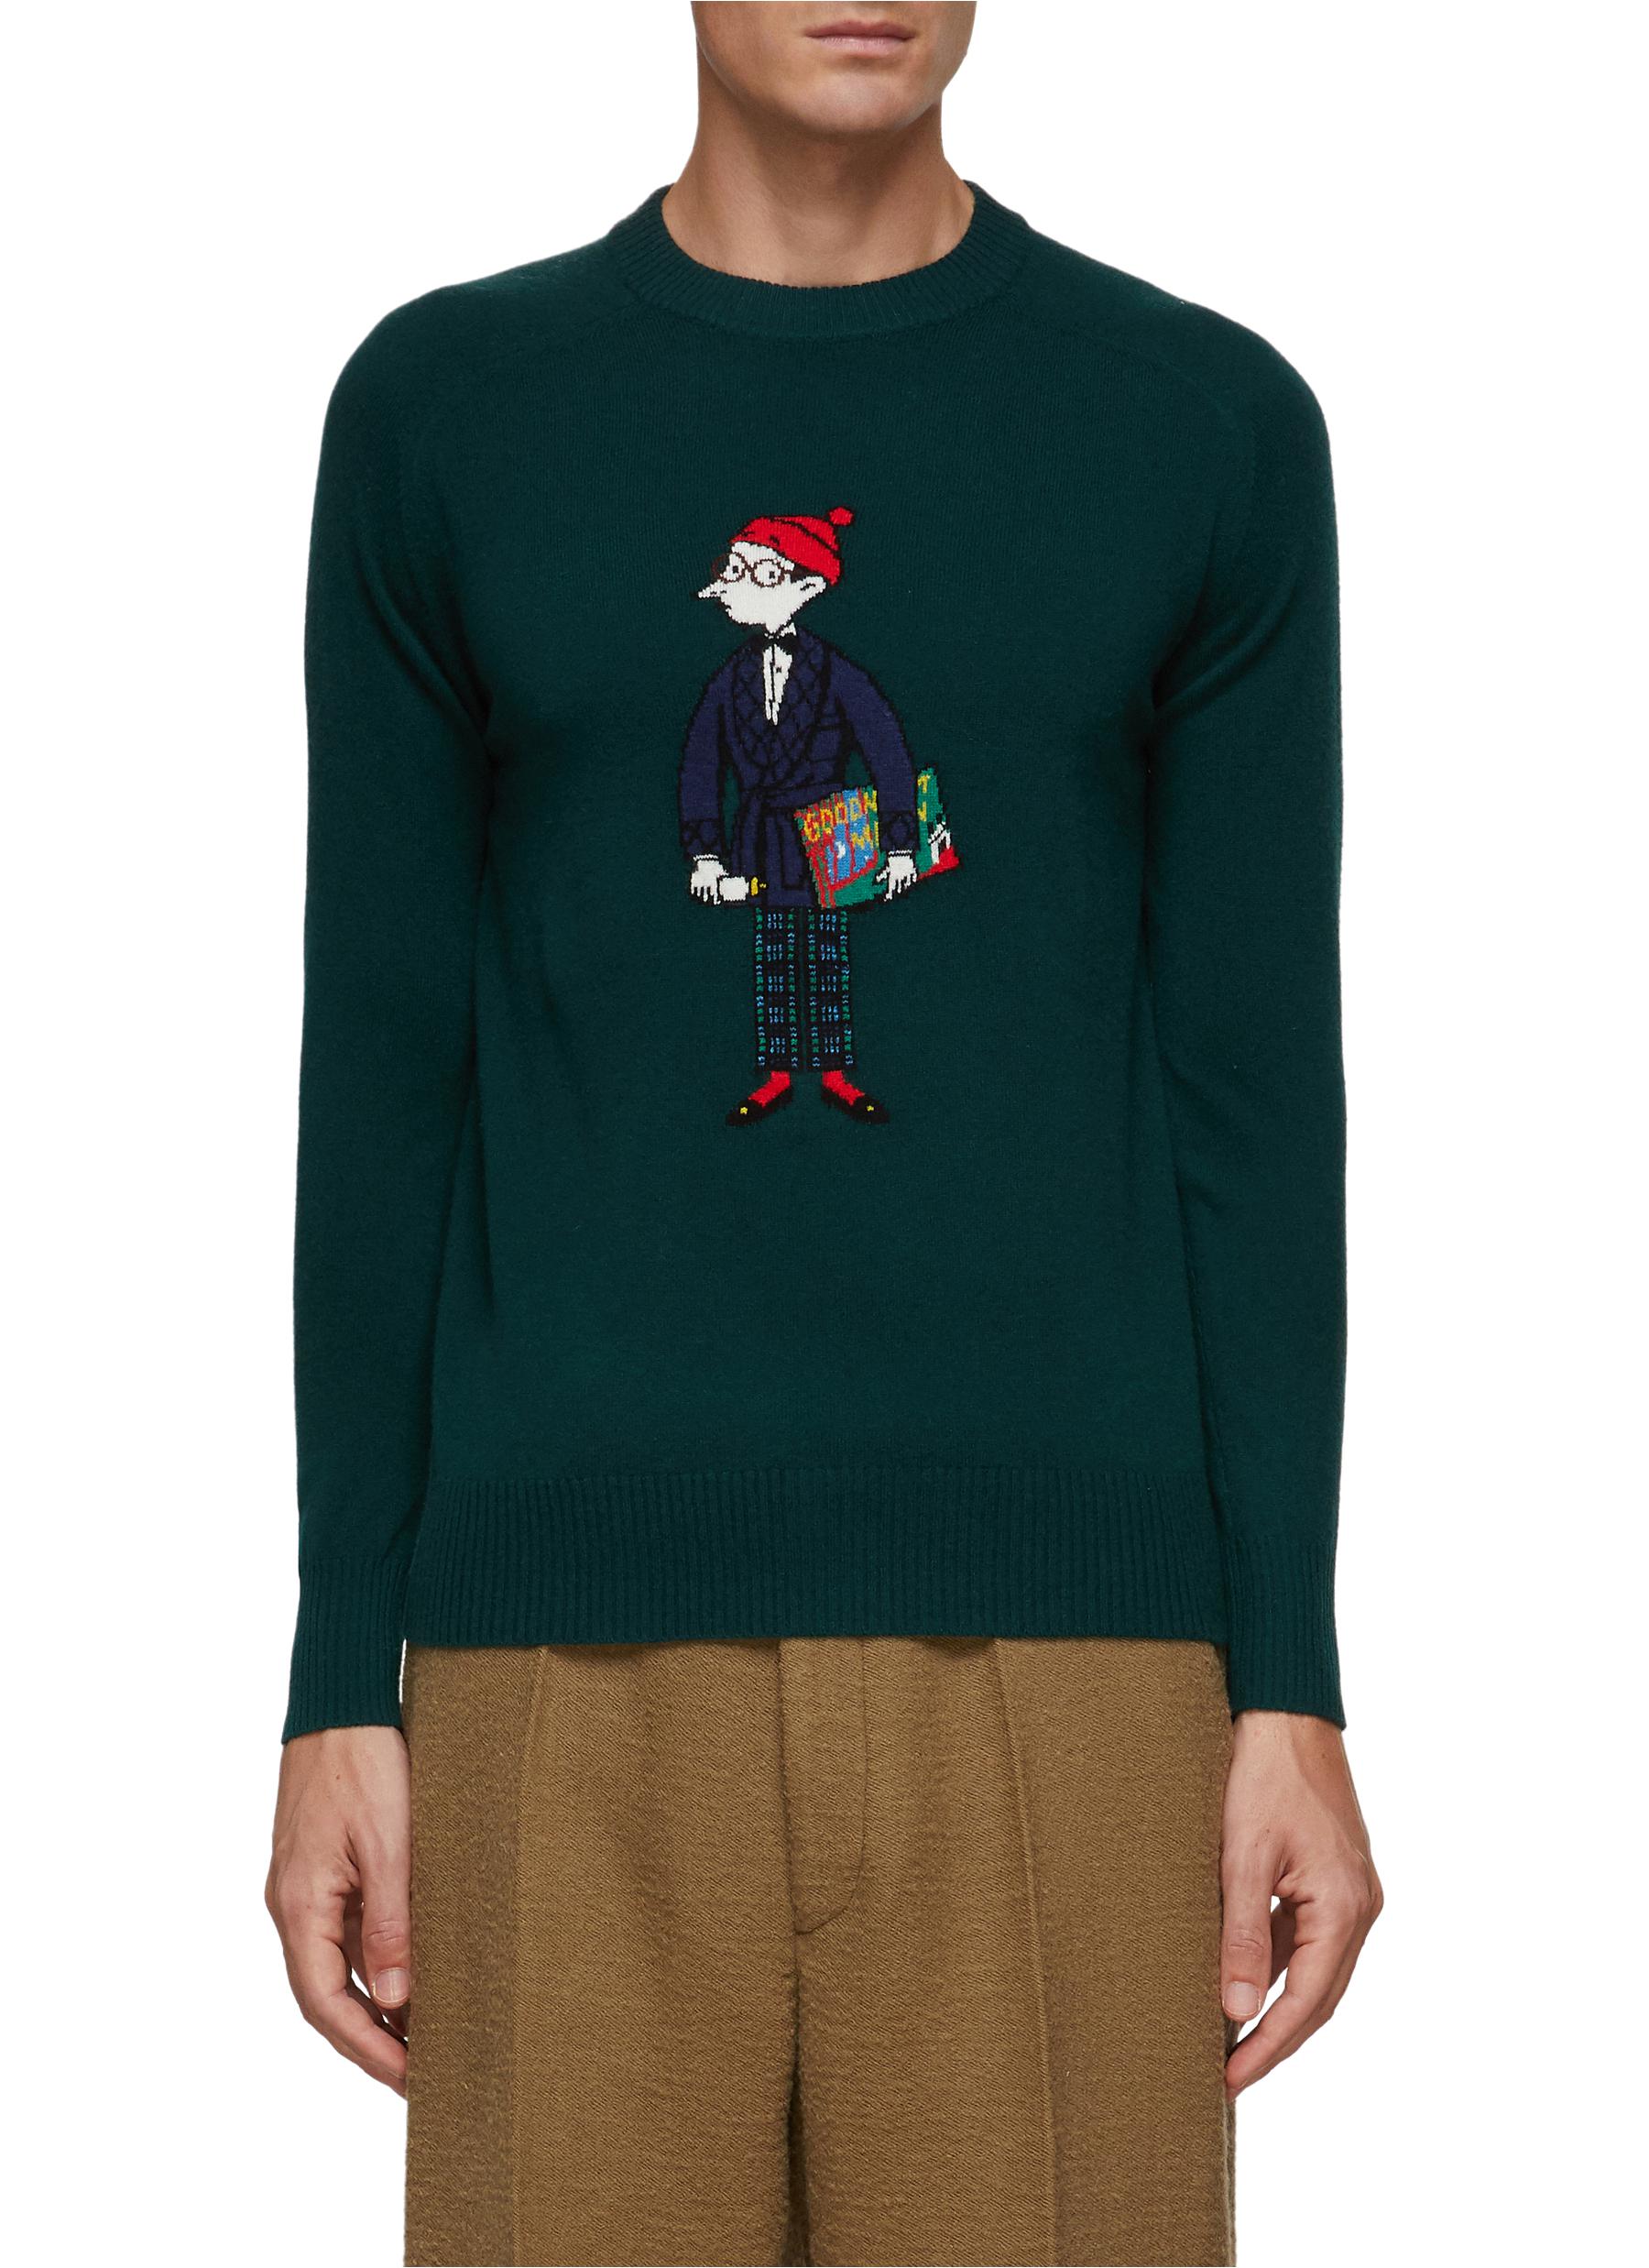 DREYDEN x Mr Slowboy 'The Father' Graphic Cashmere Knit Sweater